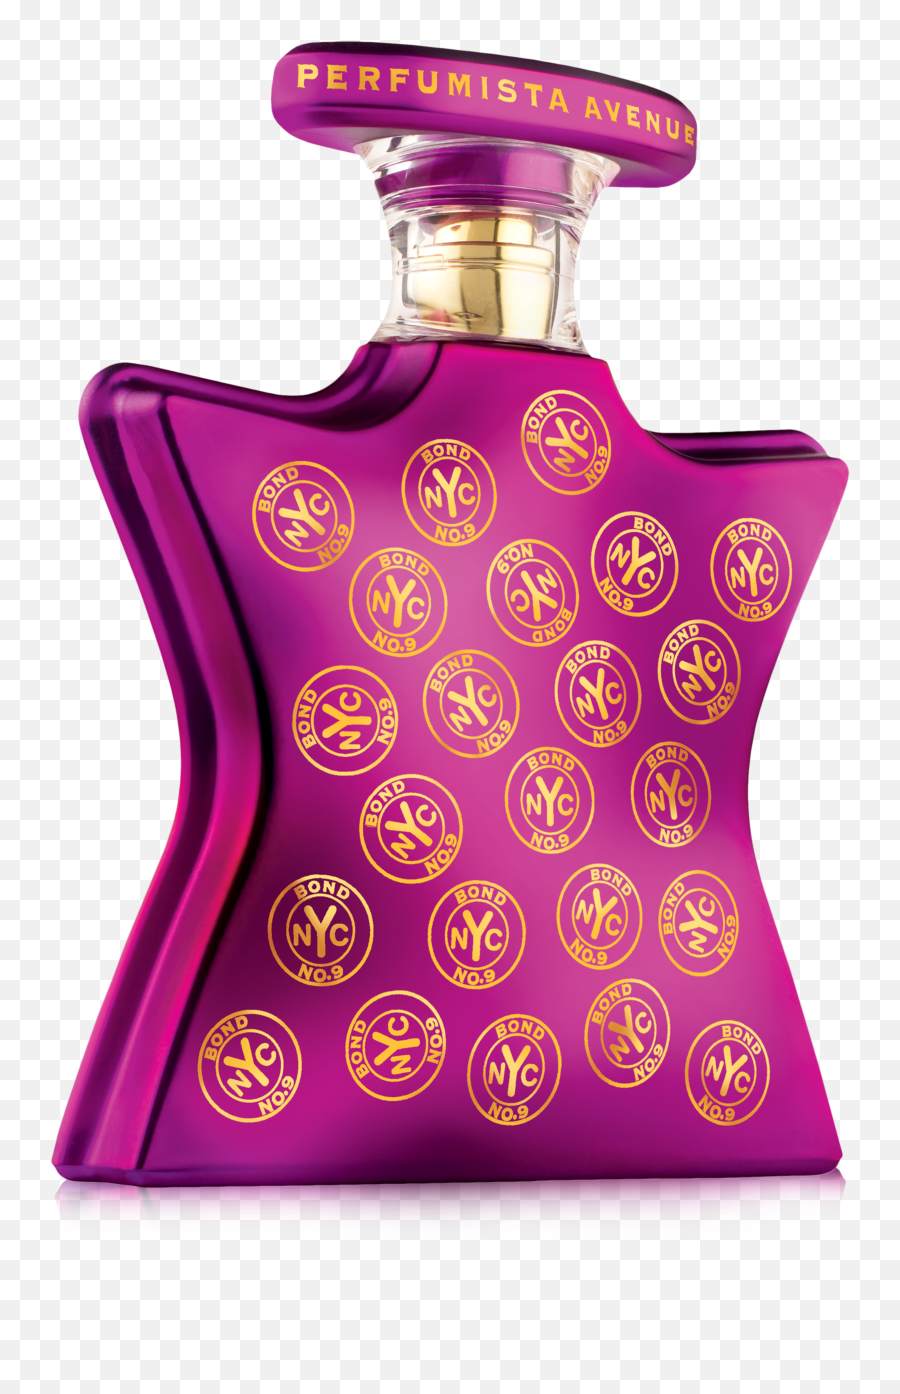 Perfumista Avenue - Bond No 9 New York Emoji,Mixed Emotions Diamods Perfume